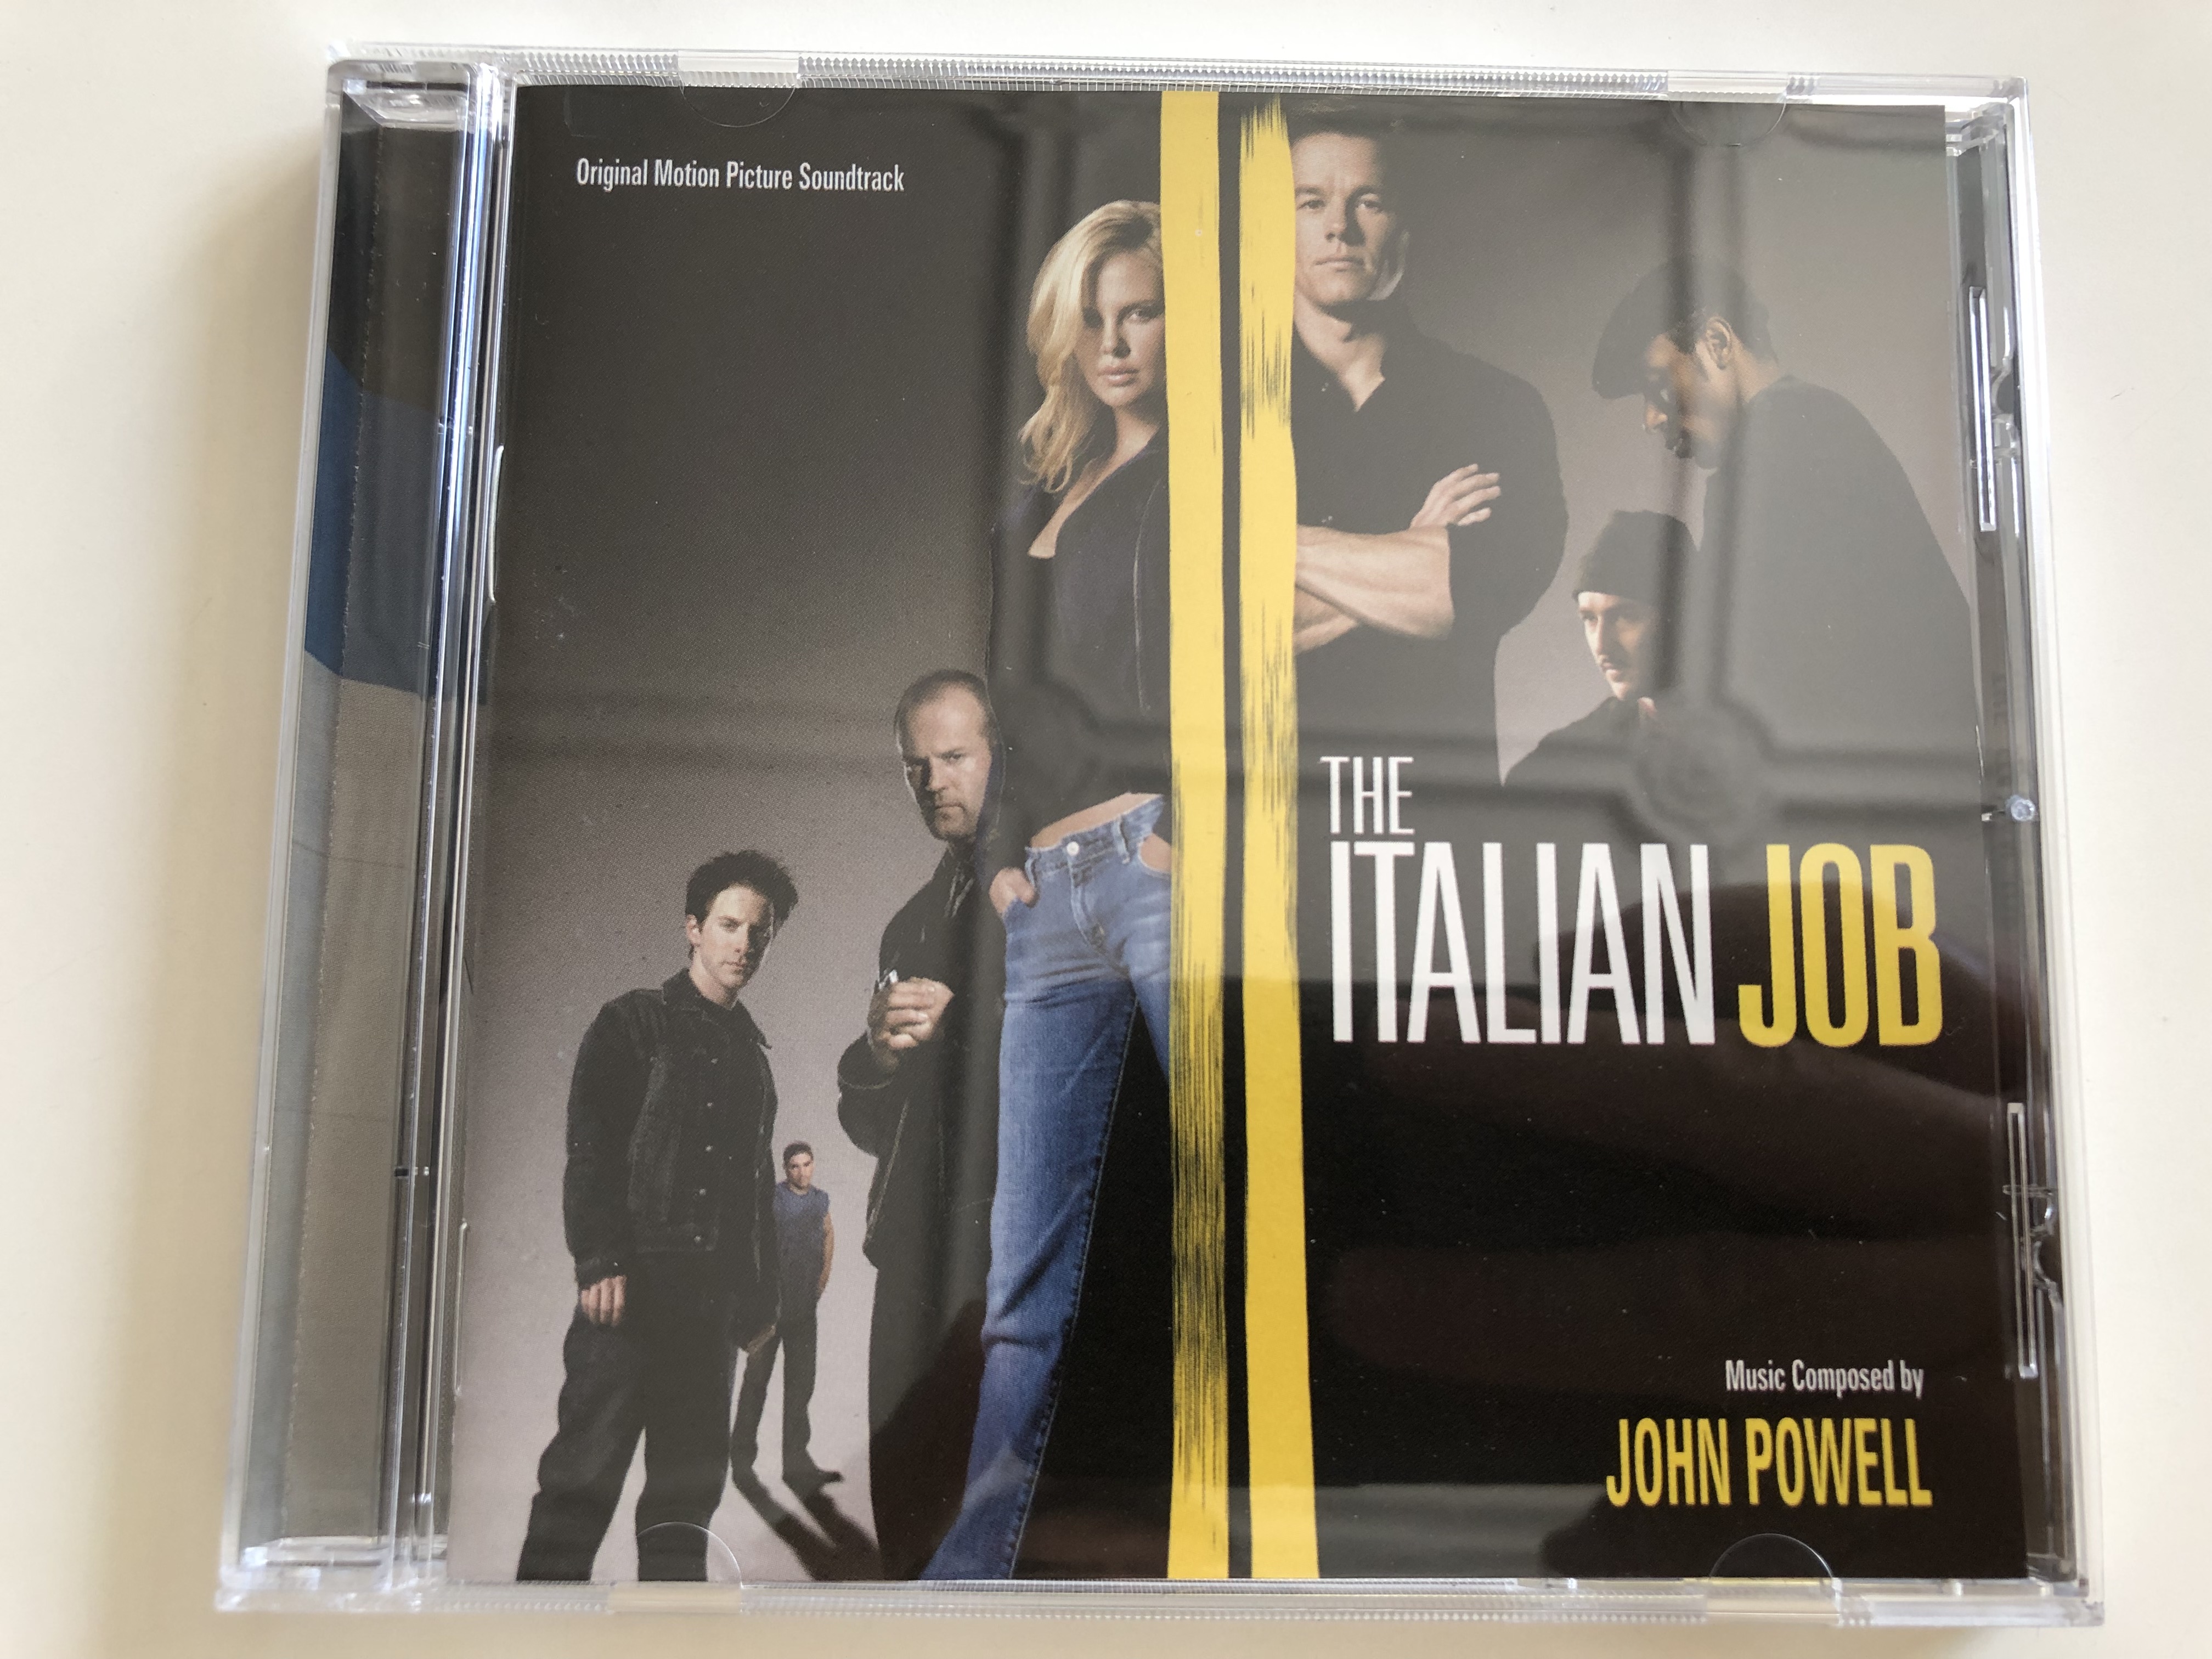 the-italian-job-original-motion-picture-soundtrack-music-by-john-powell-var-se-sarabande-audio-cd-2003-1-.jpg